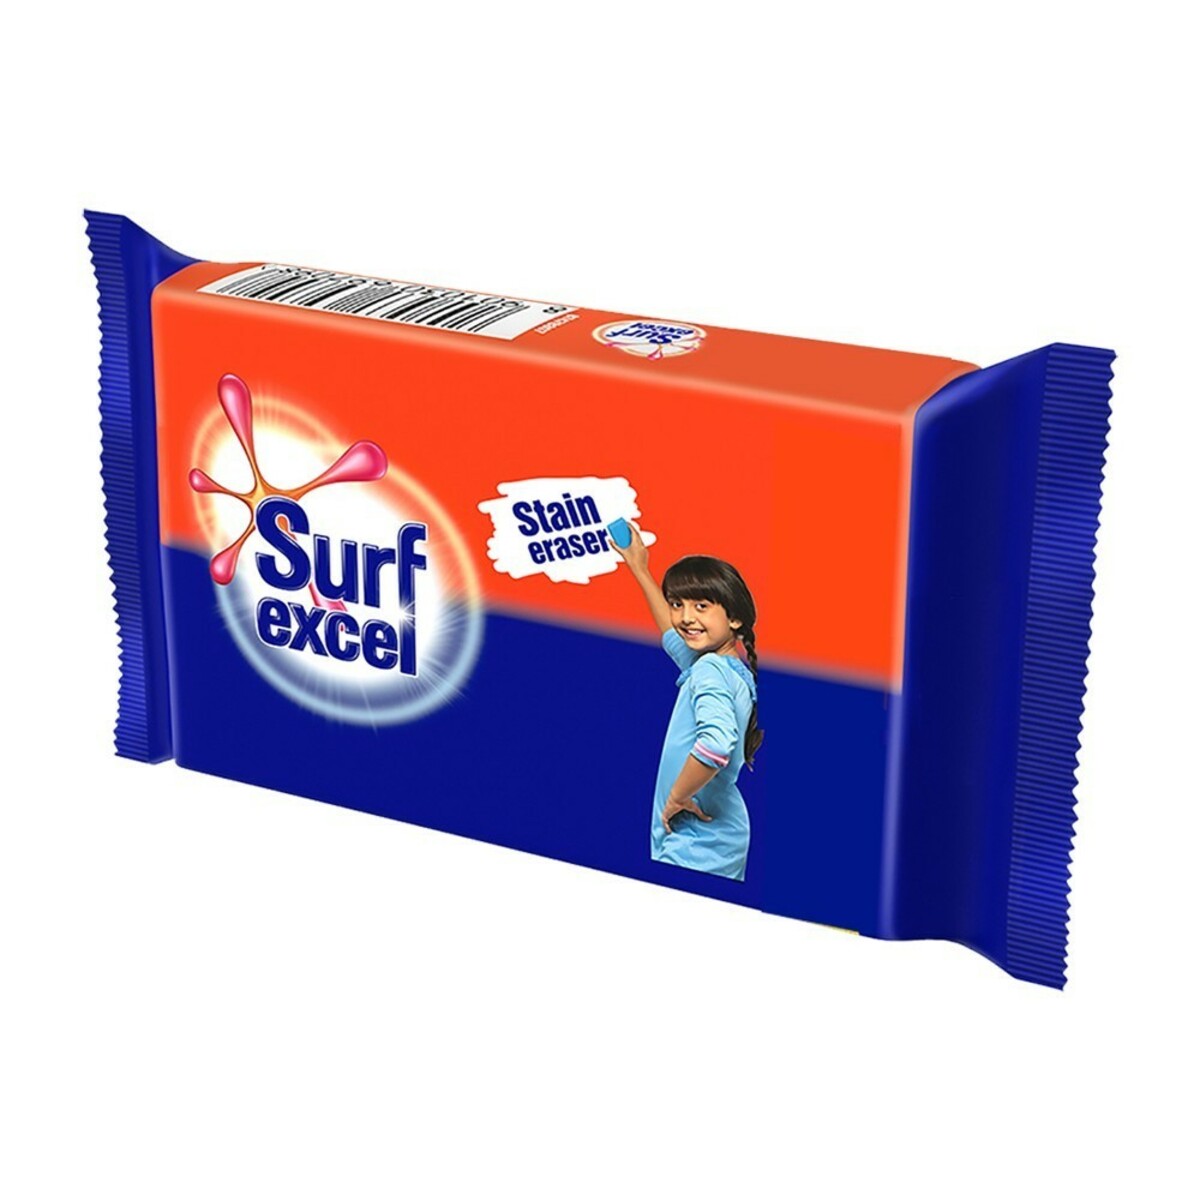 Surf Excel Detergent Bar 80g